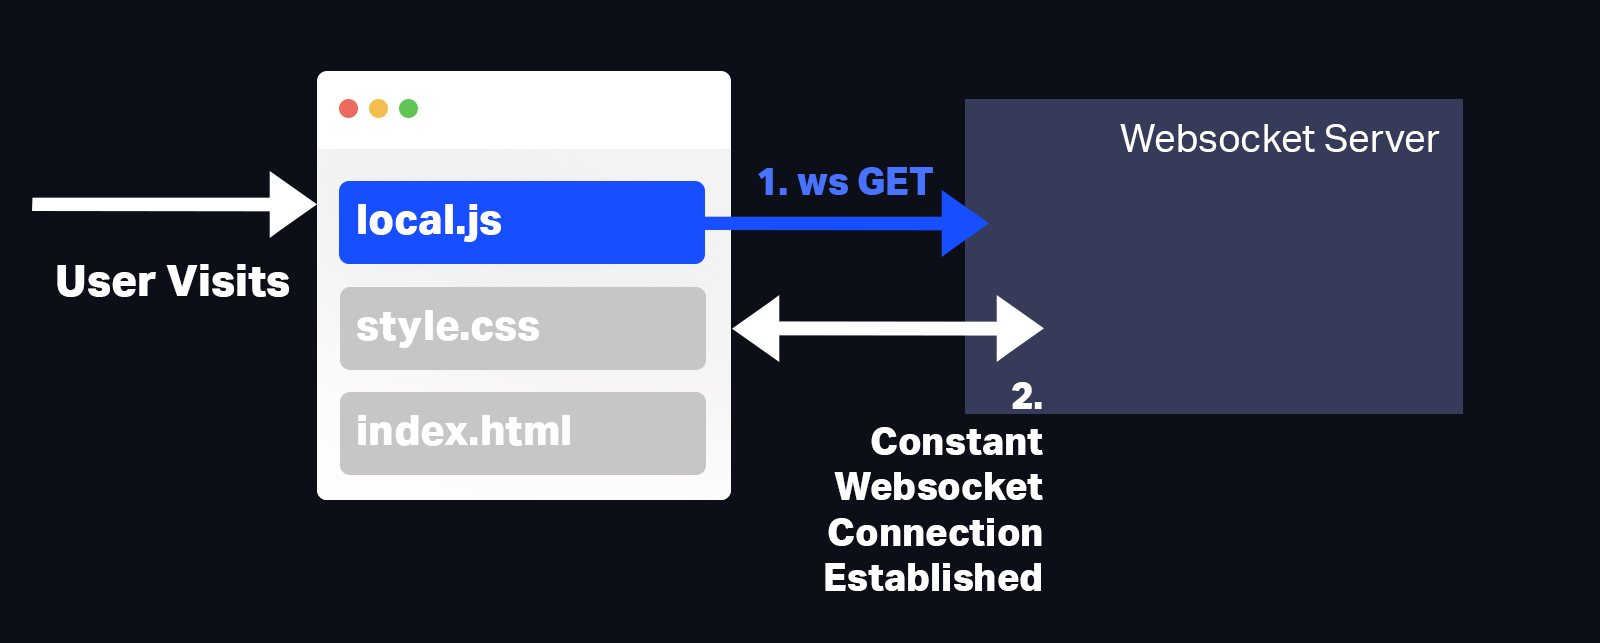 Websocket server flow chart.